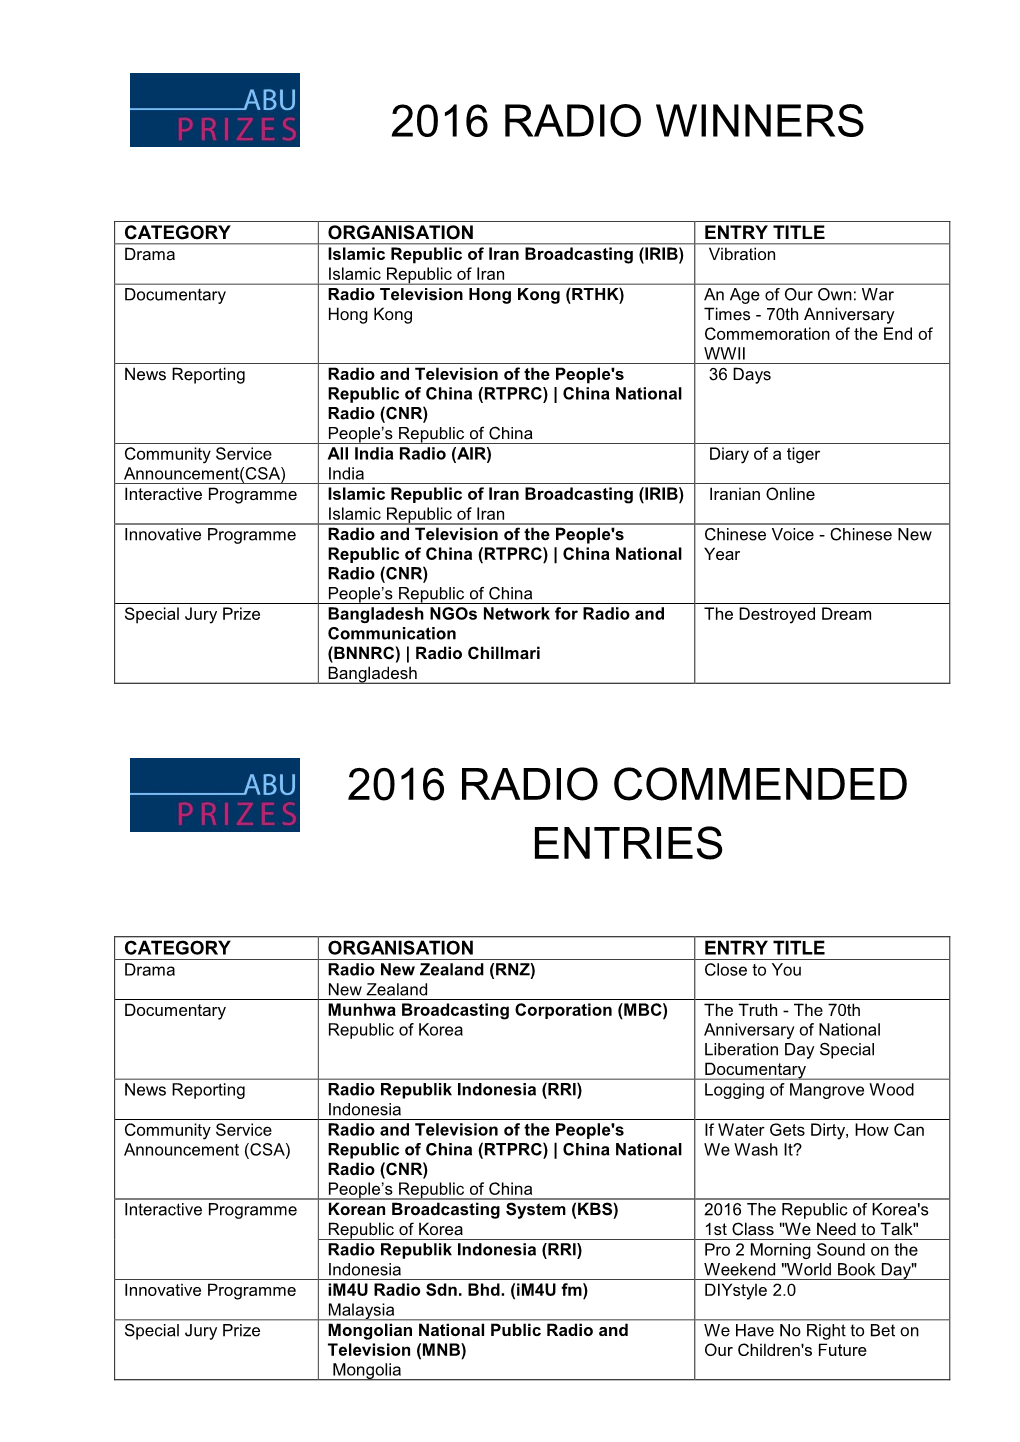 ABU Prizes 2016 Winners List